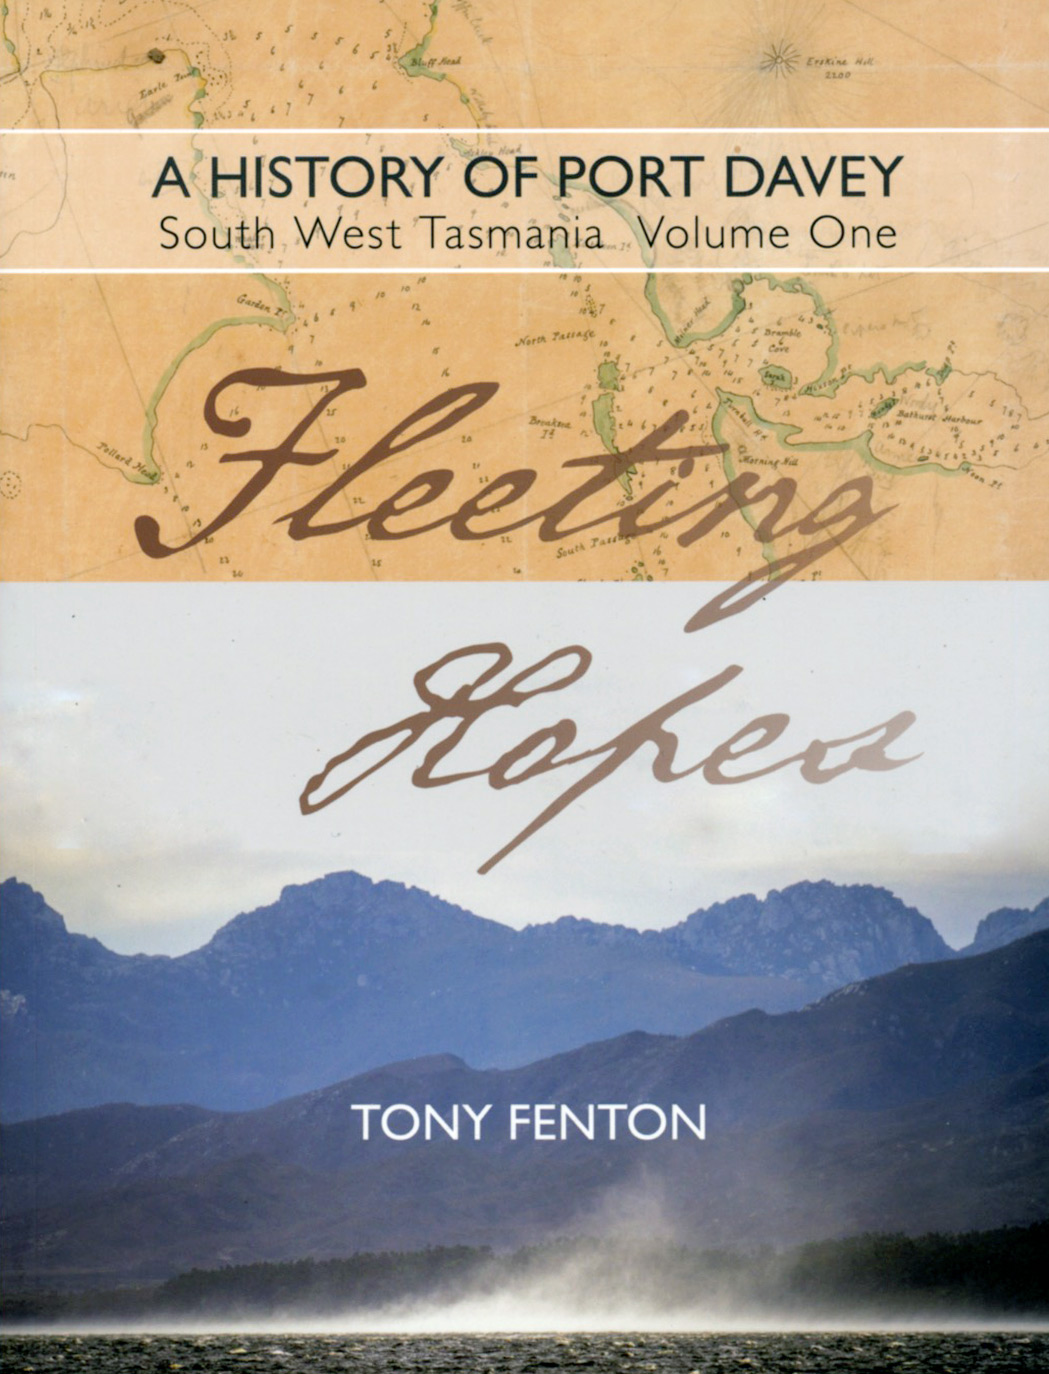 Fleeting Hopes - a History of Port Davey